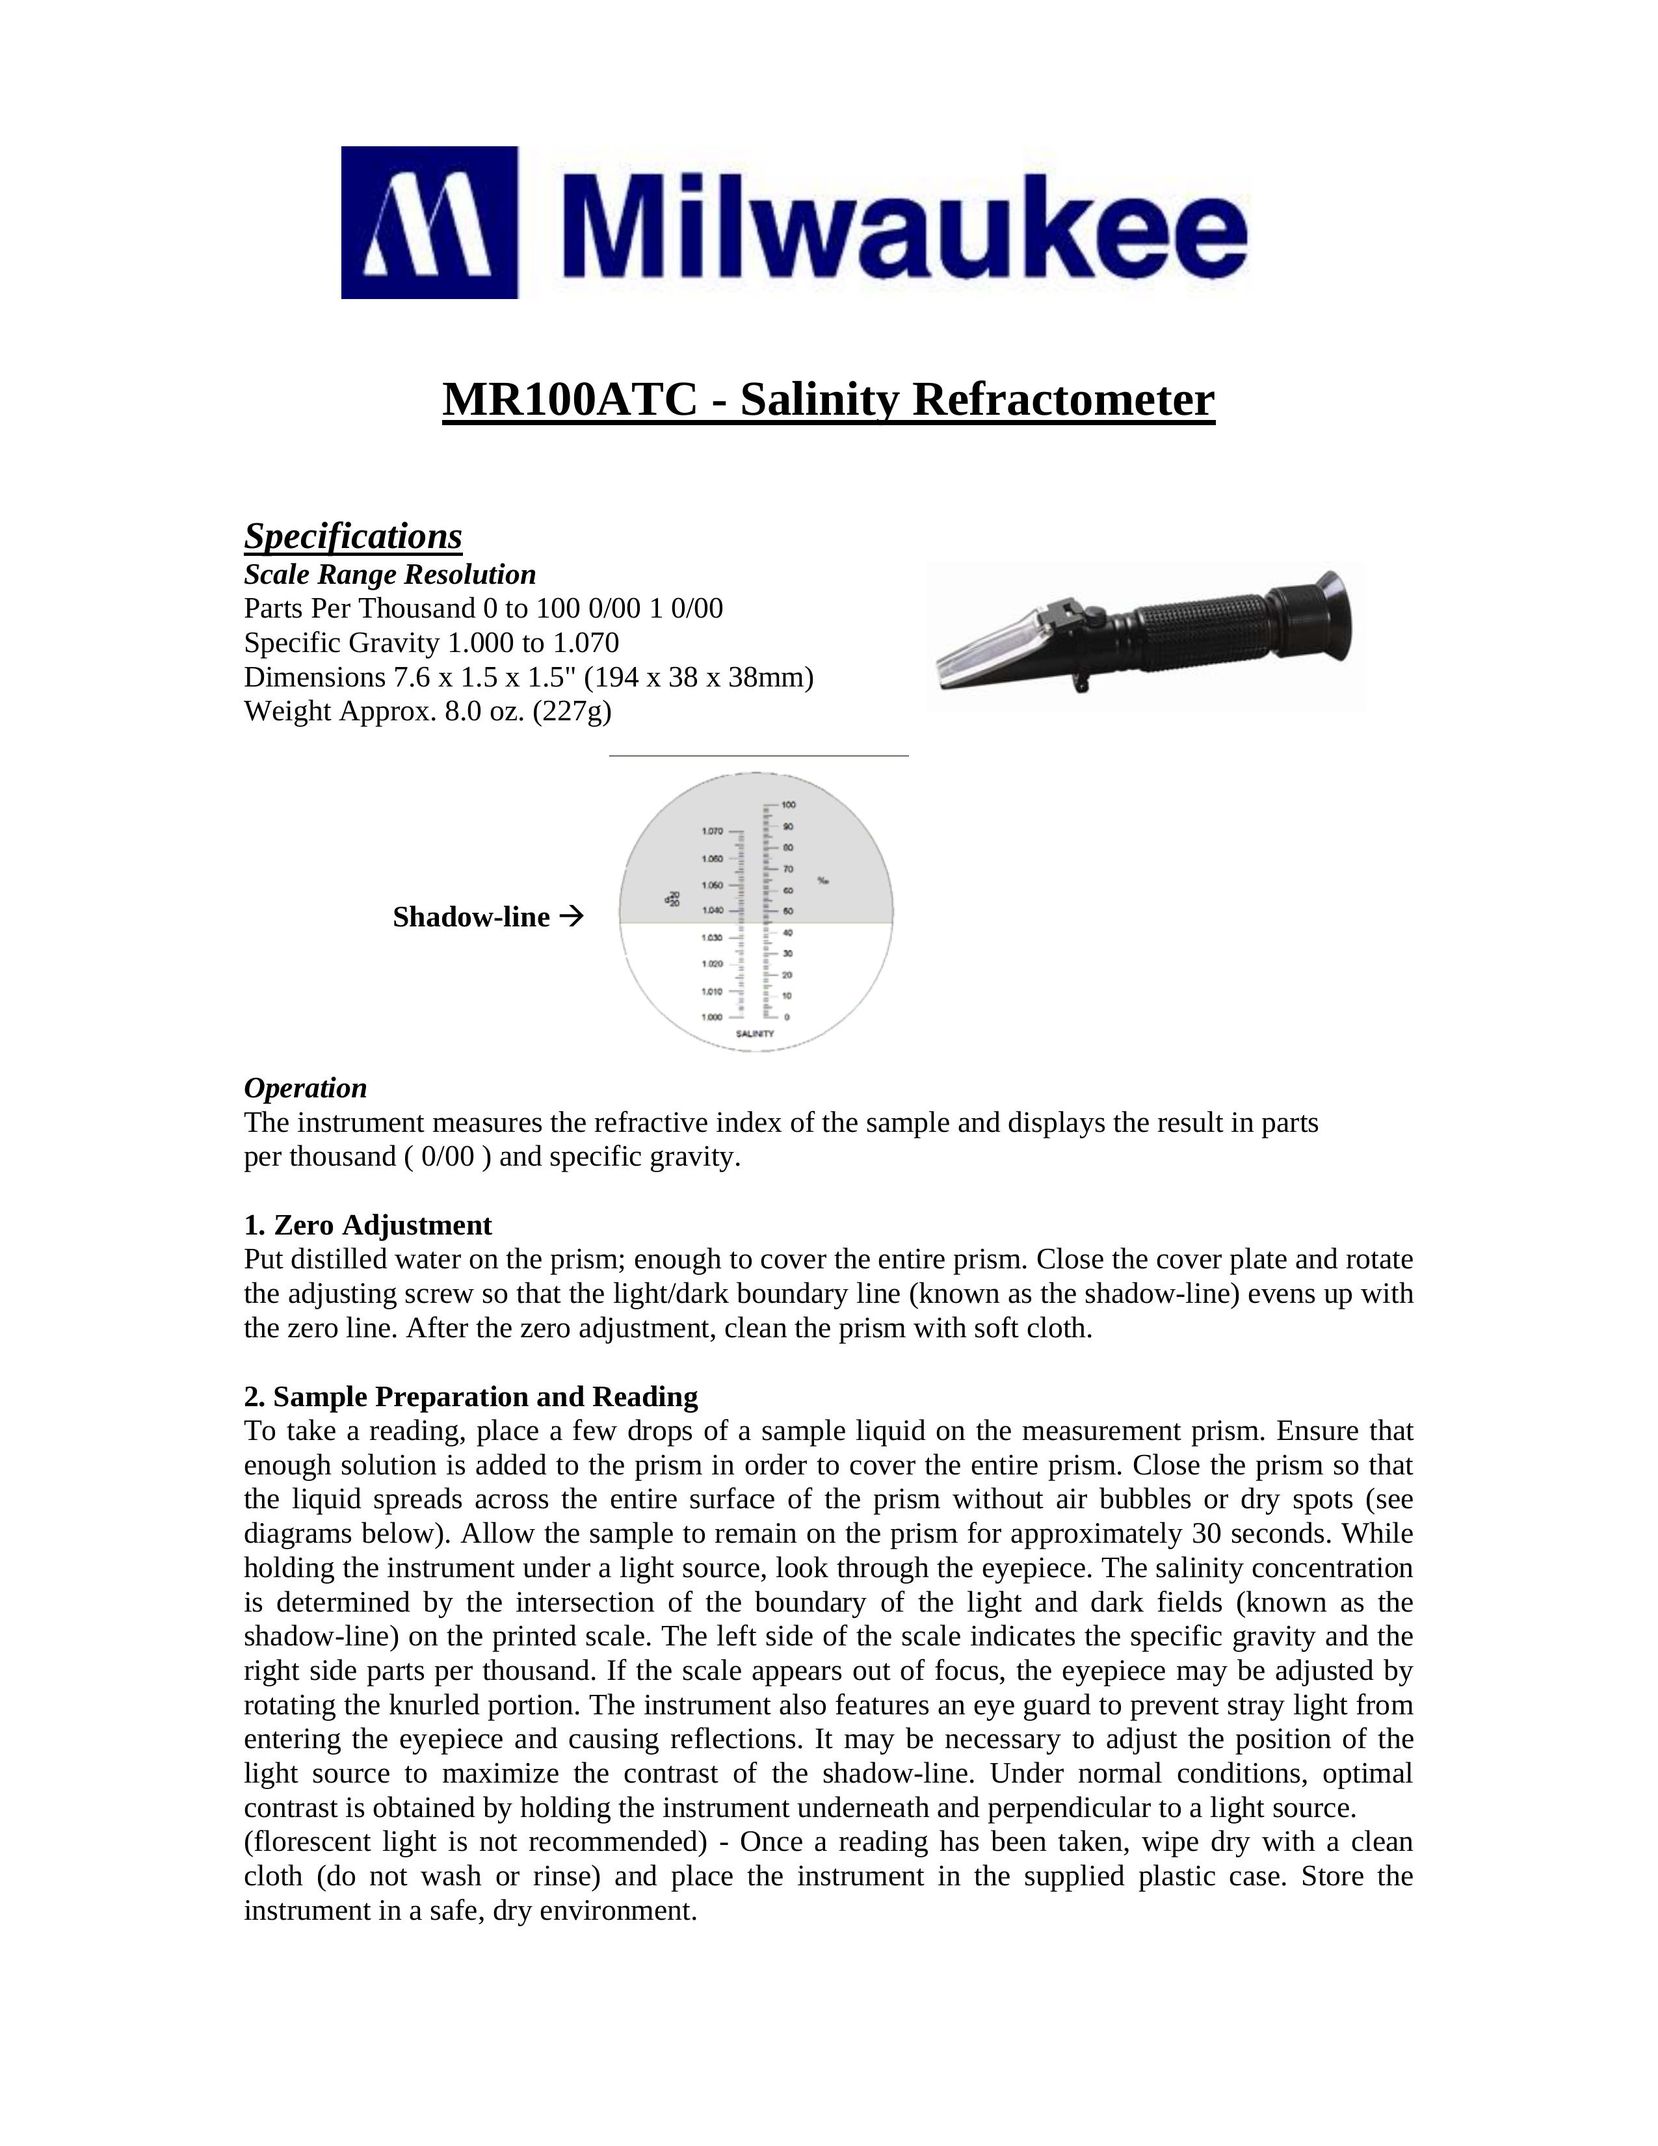 Milwaukee MR100ATC Doll User Manual